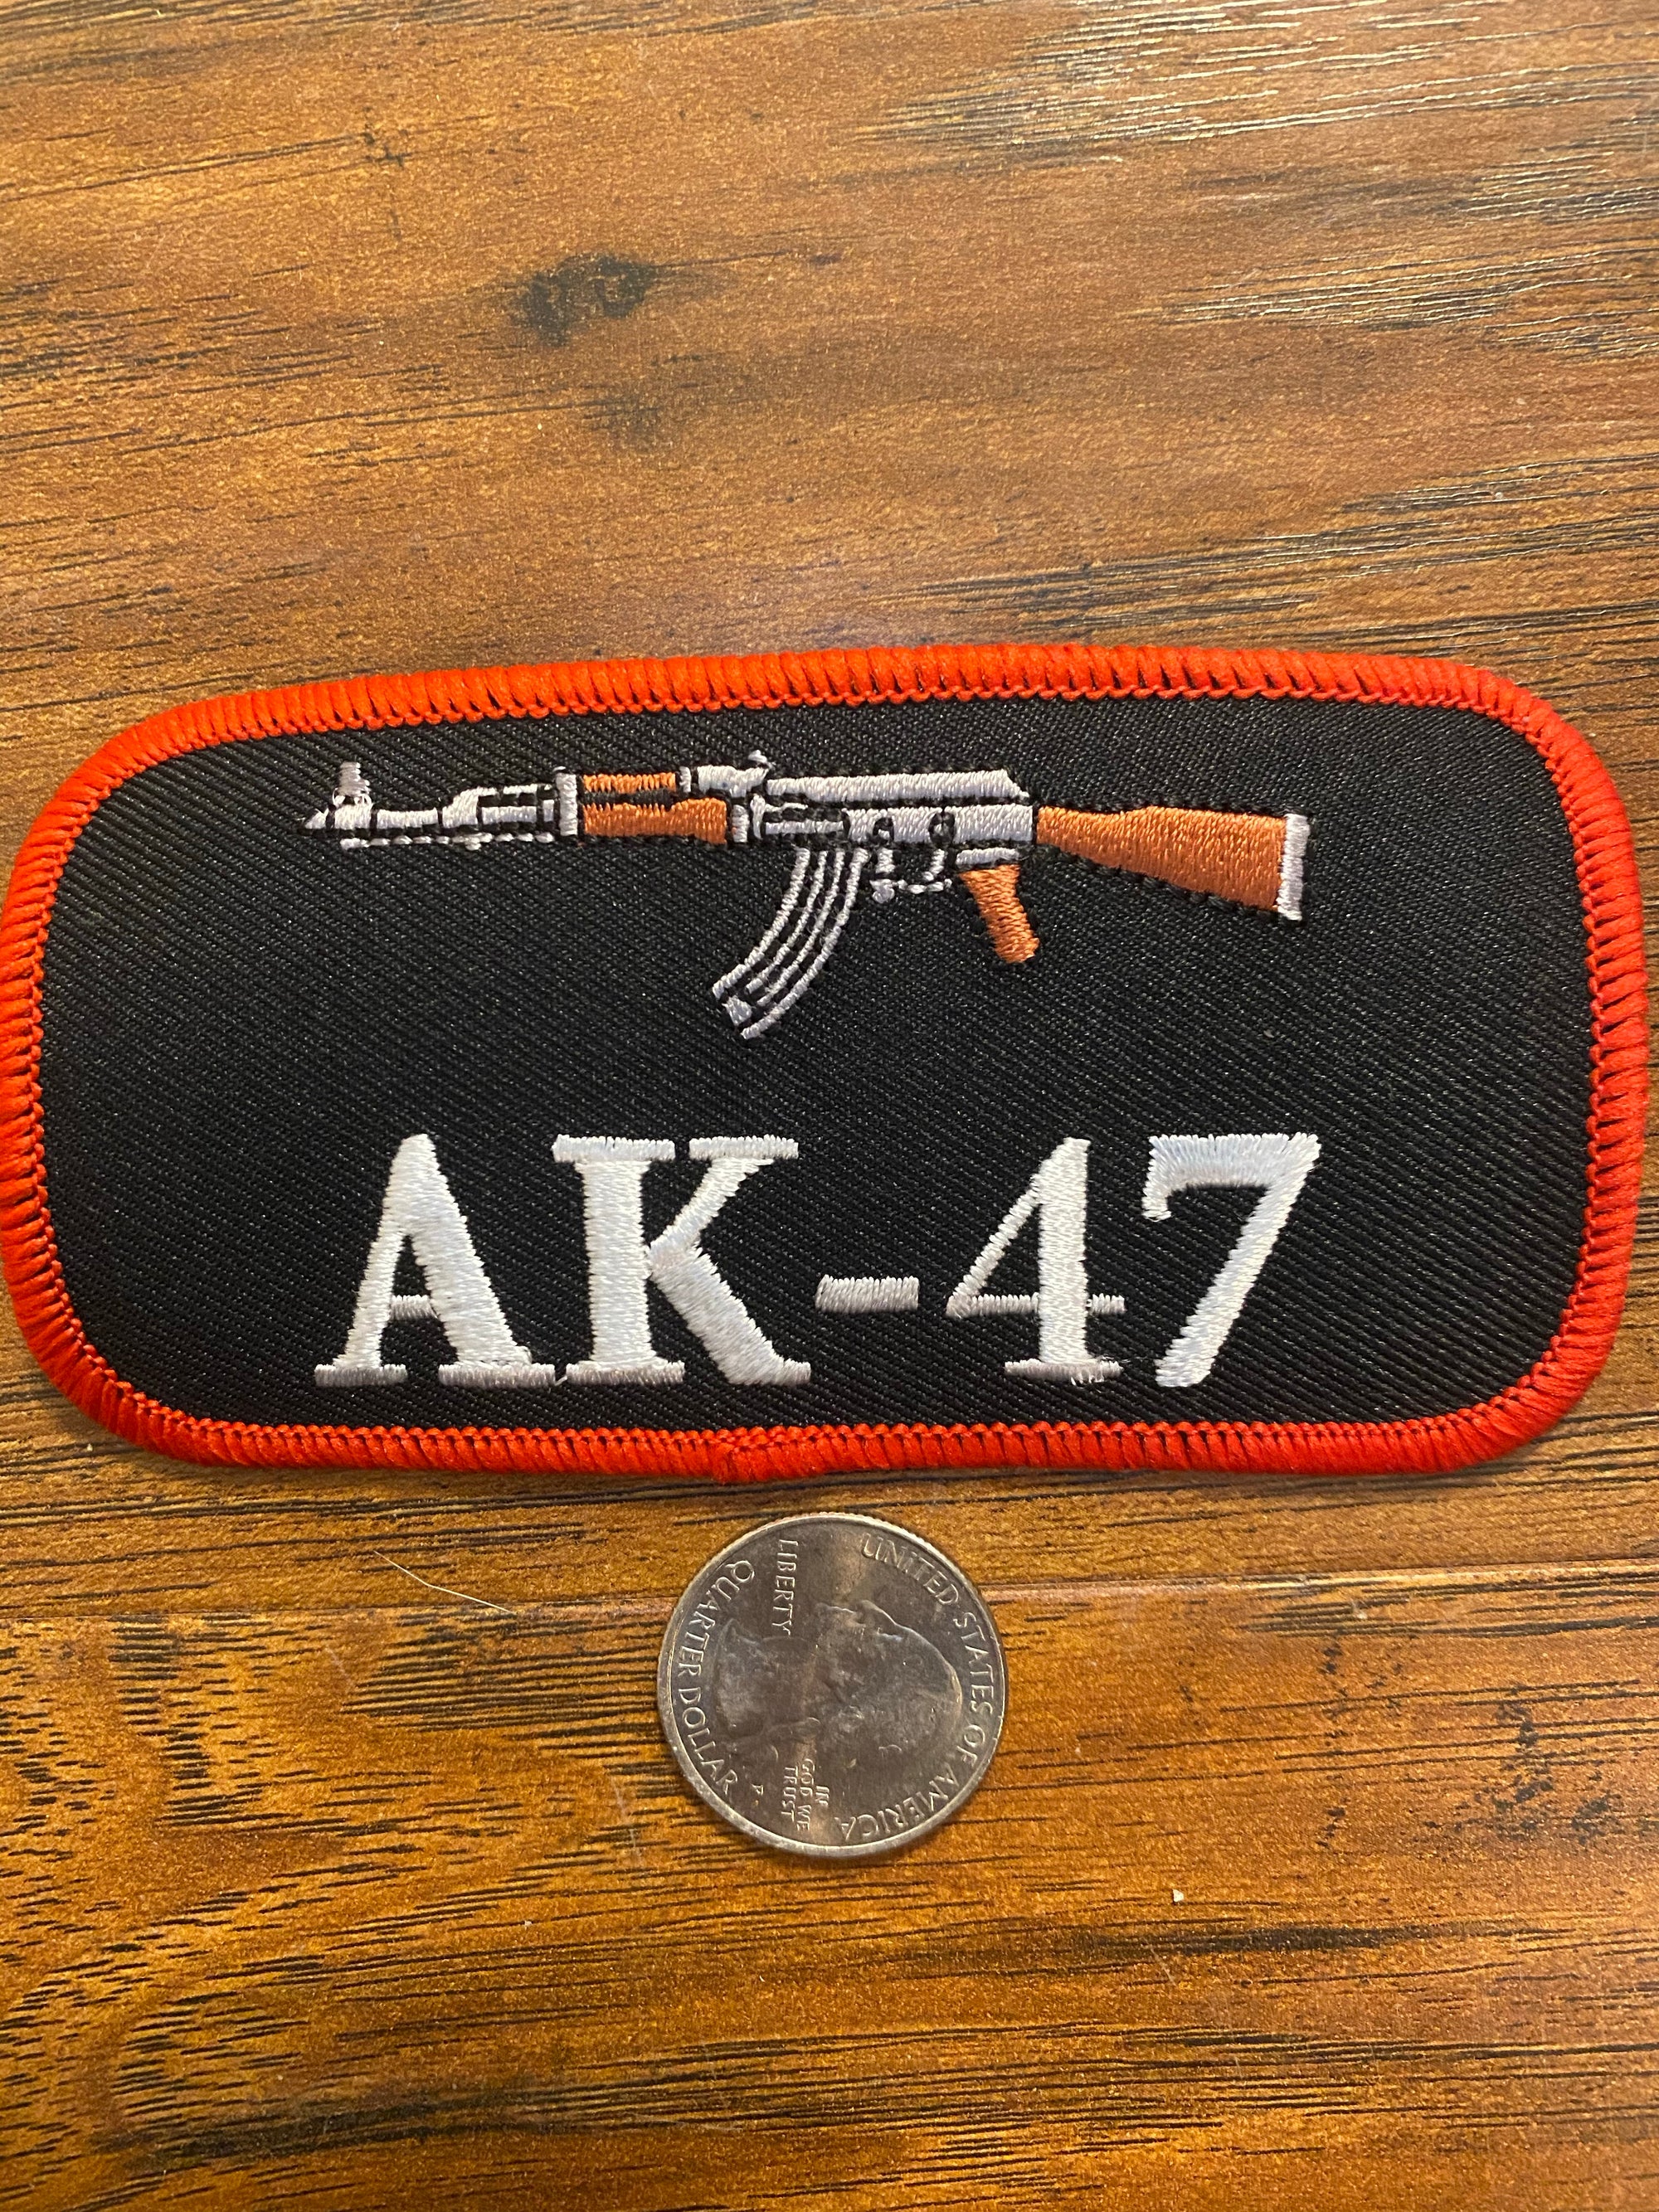 AK-47 Guns, Ammo, Bullets, Glock